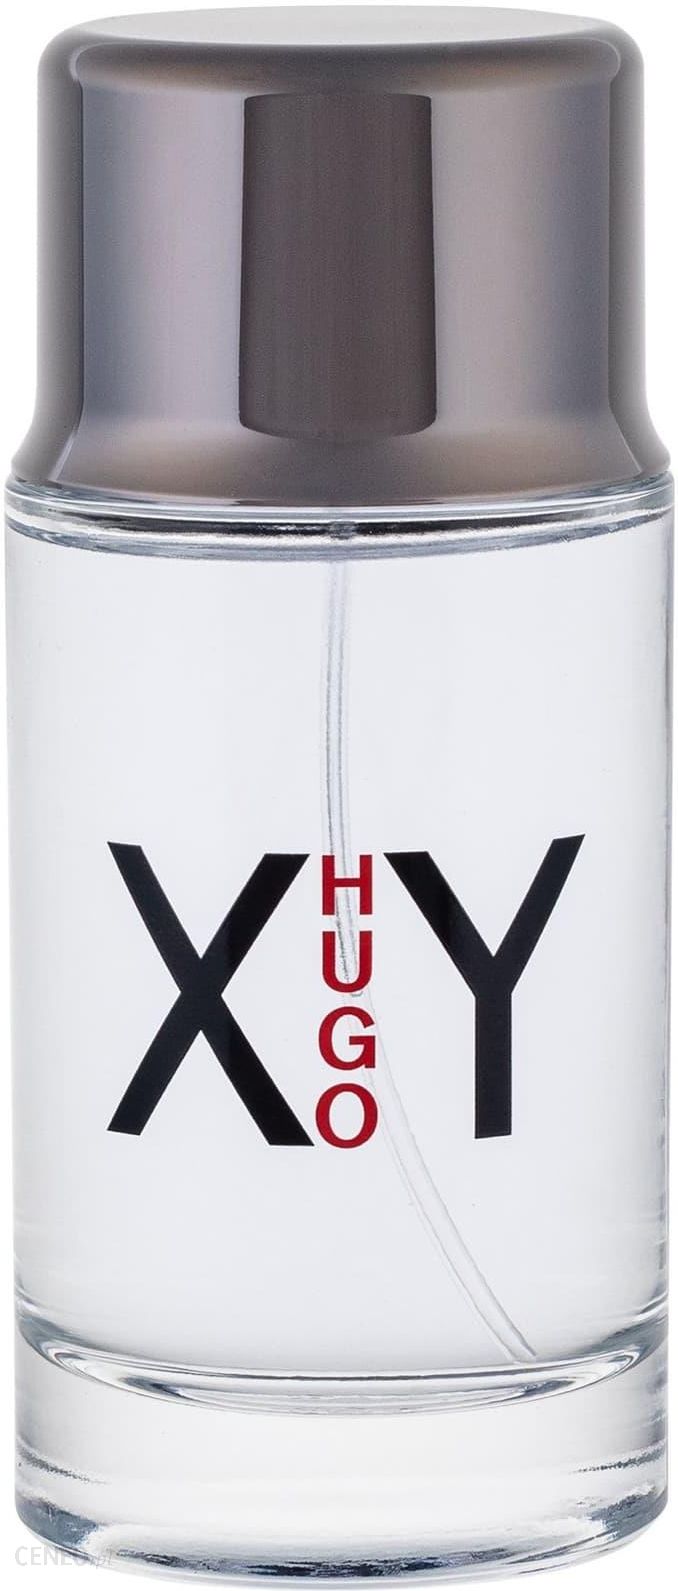 hugo boss xy discontinued